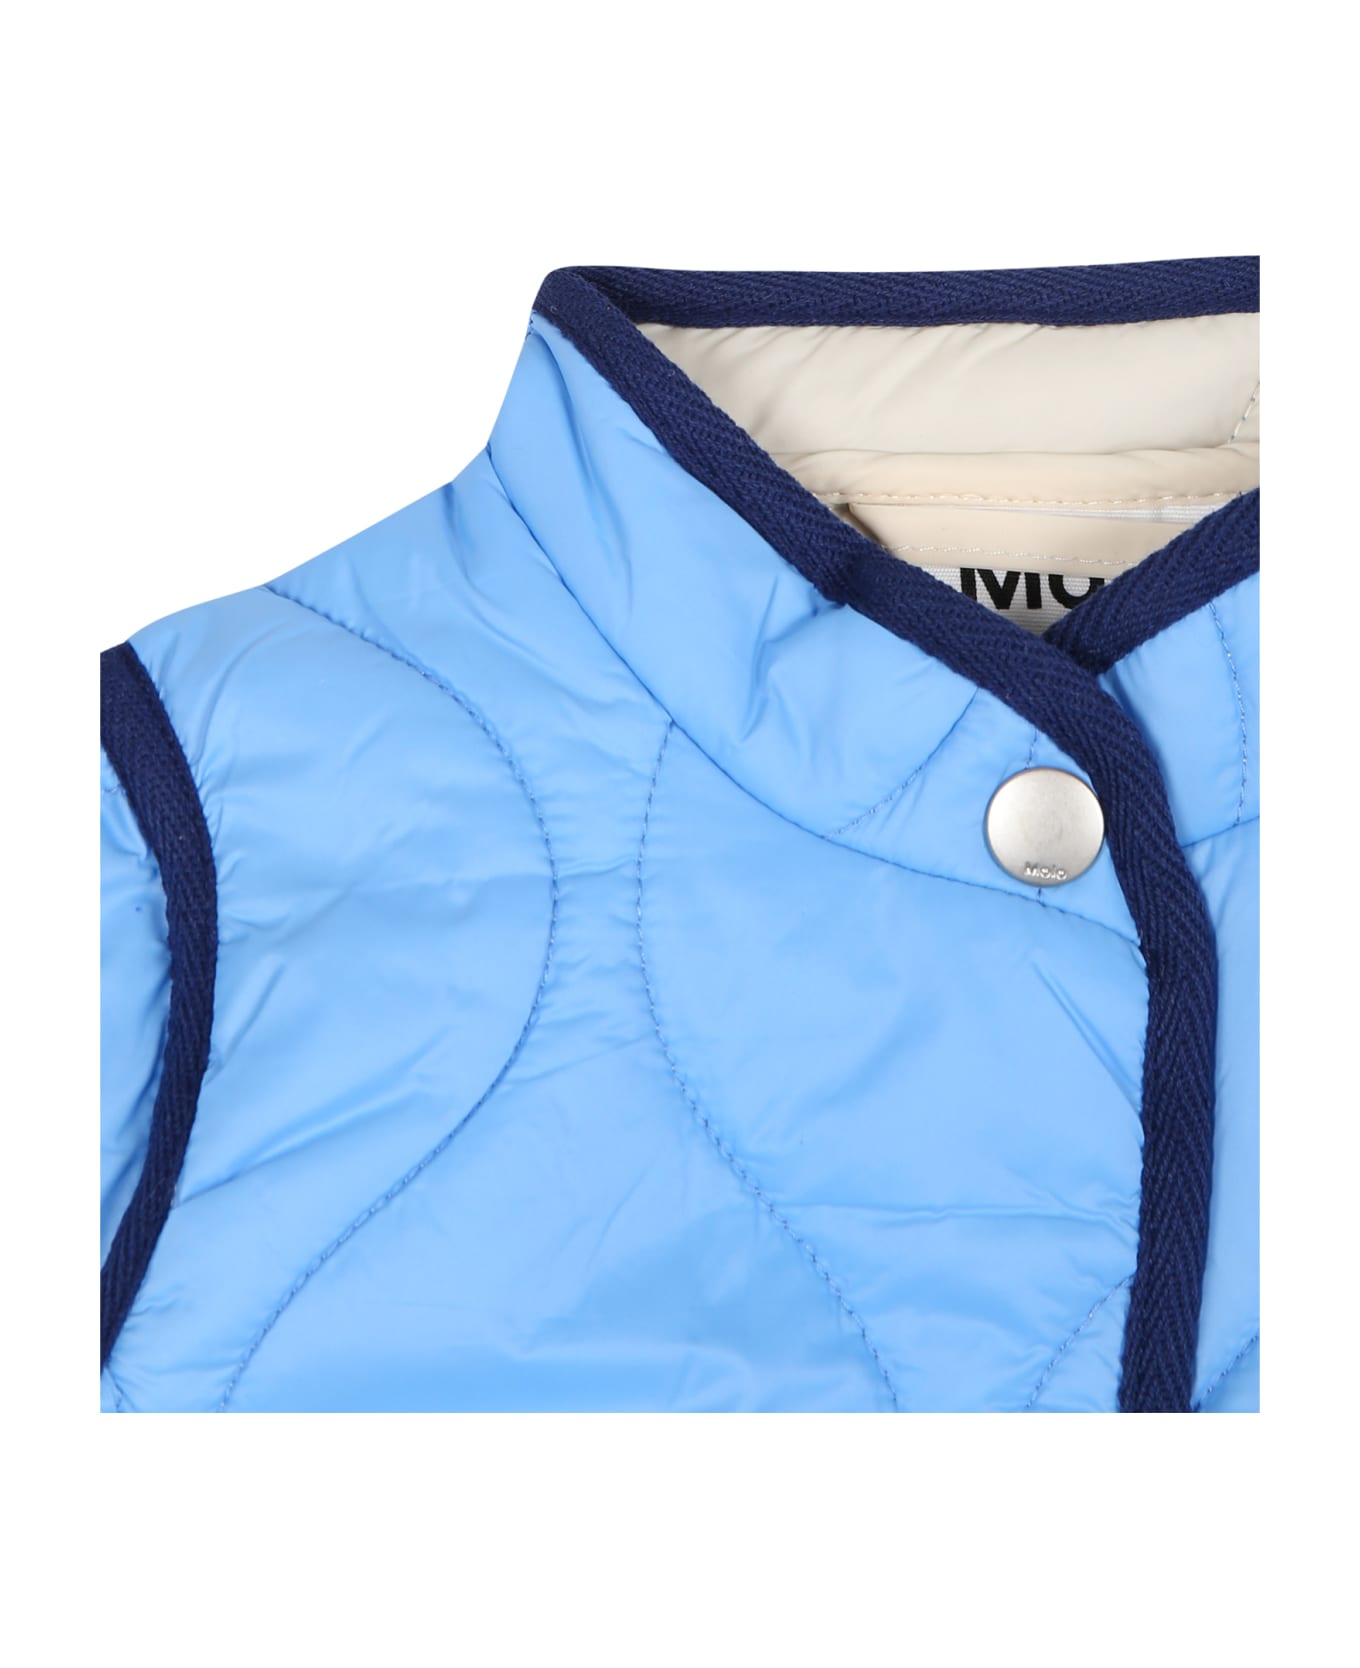 Molo Light Blue Down Jacket Harrie For Baby Boy - Light Blue コート＆ジャケット